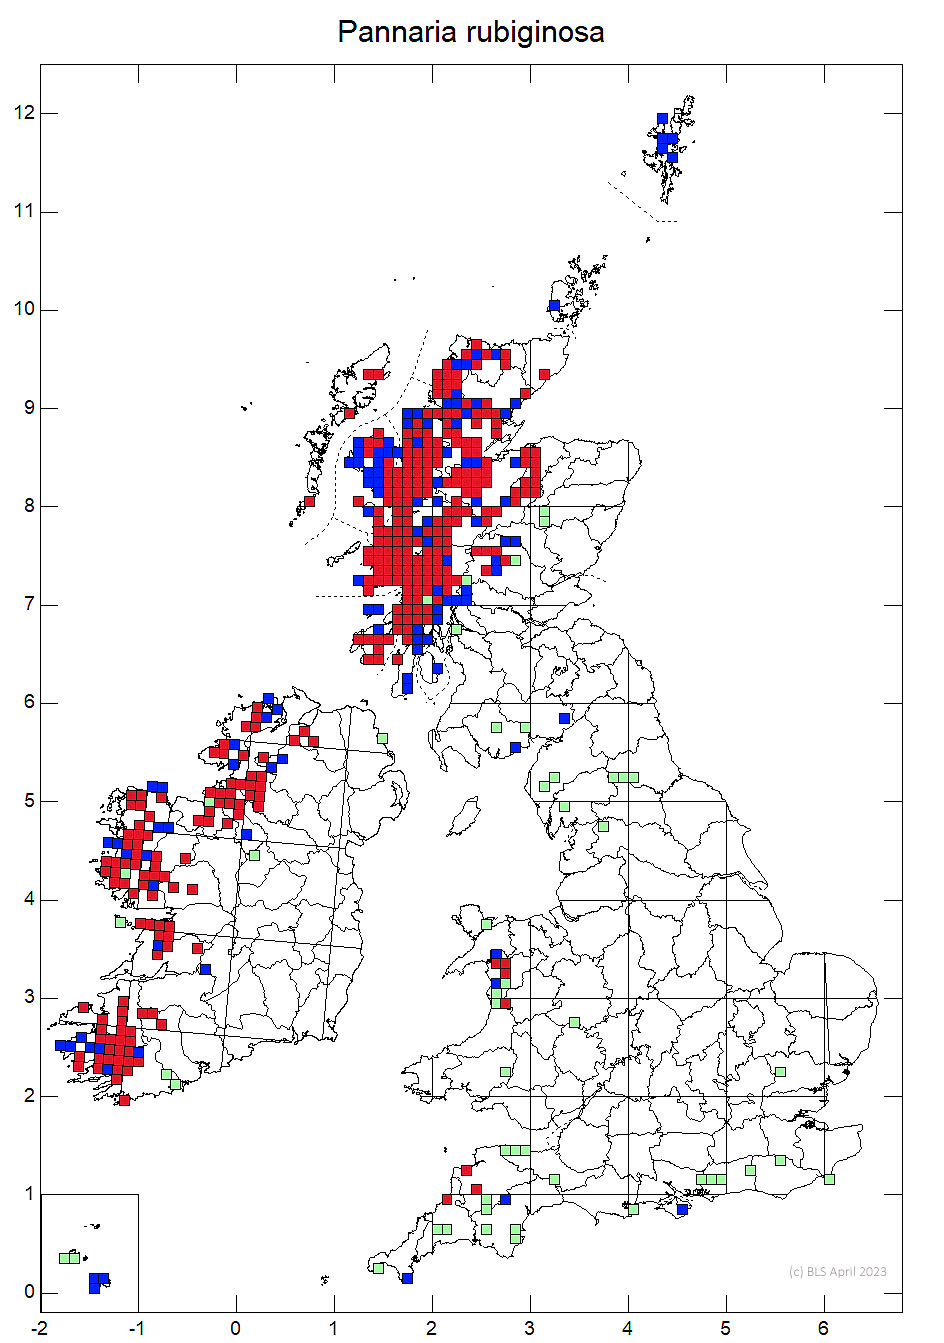 Pannaria rubiginosa 10km sq distribution map